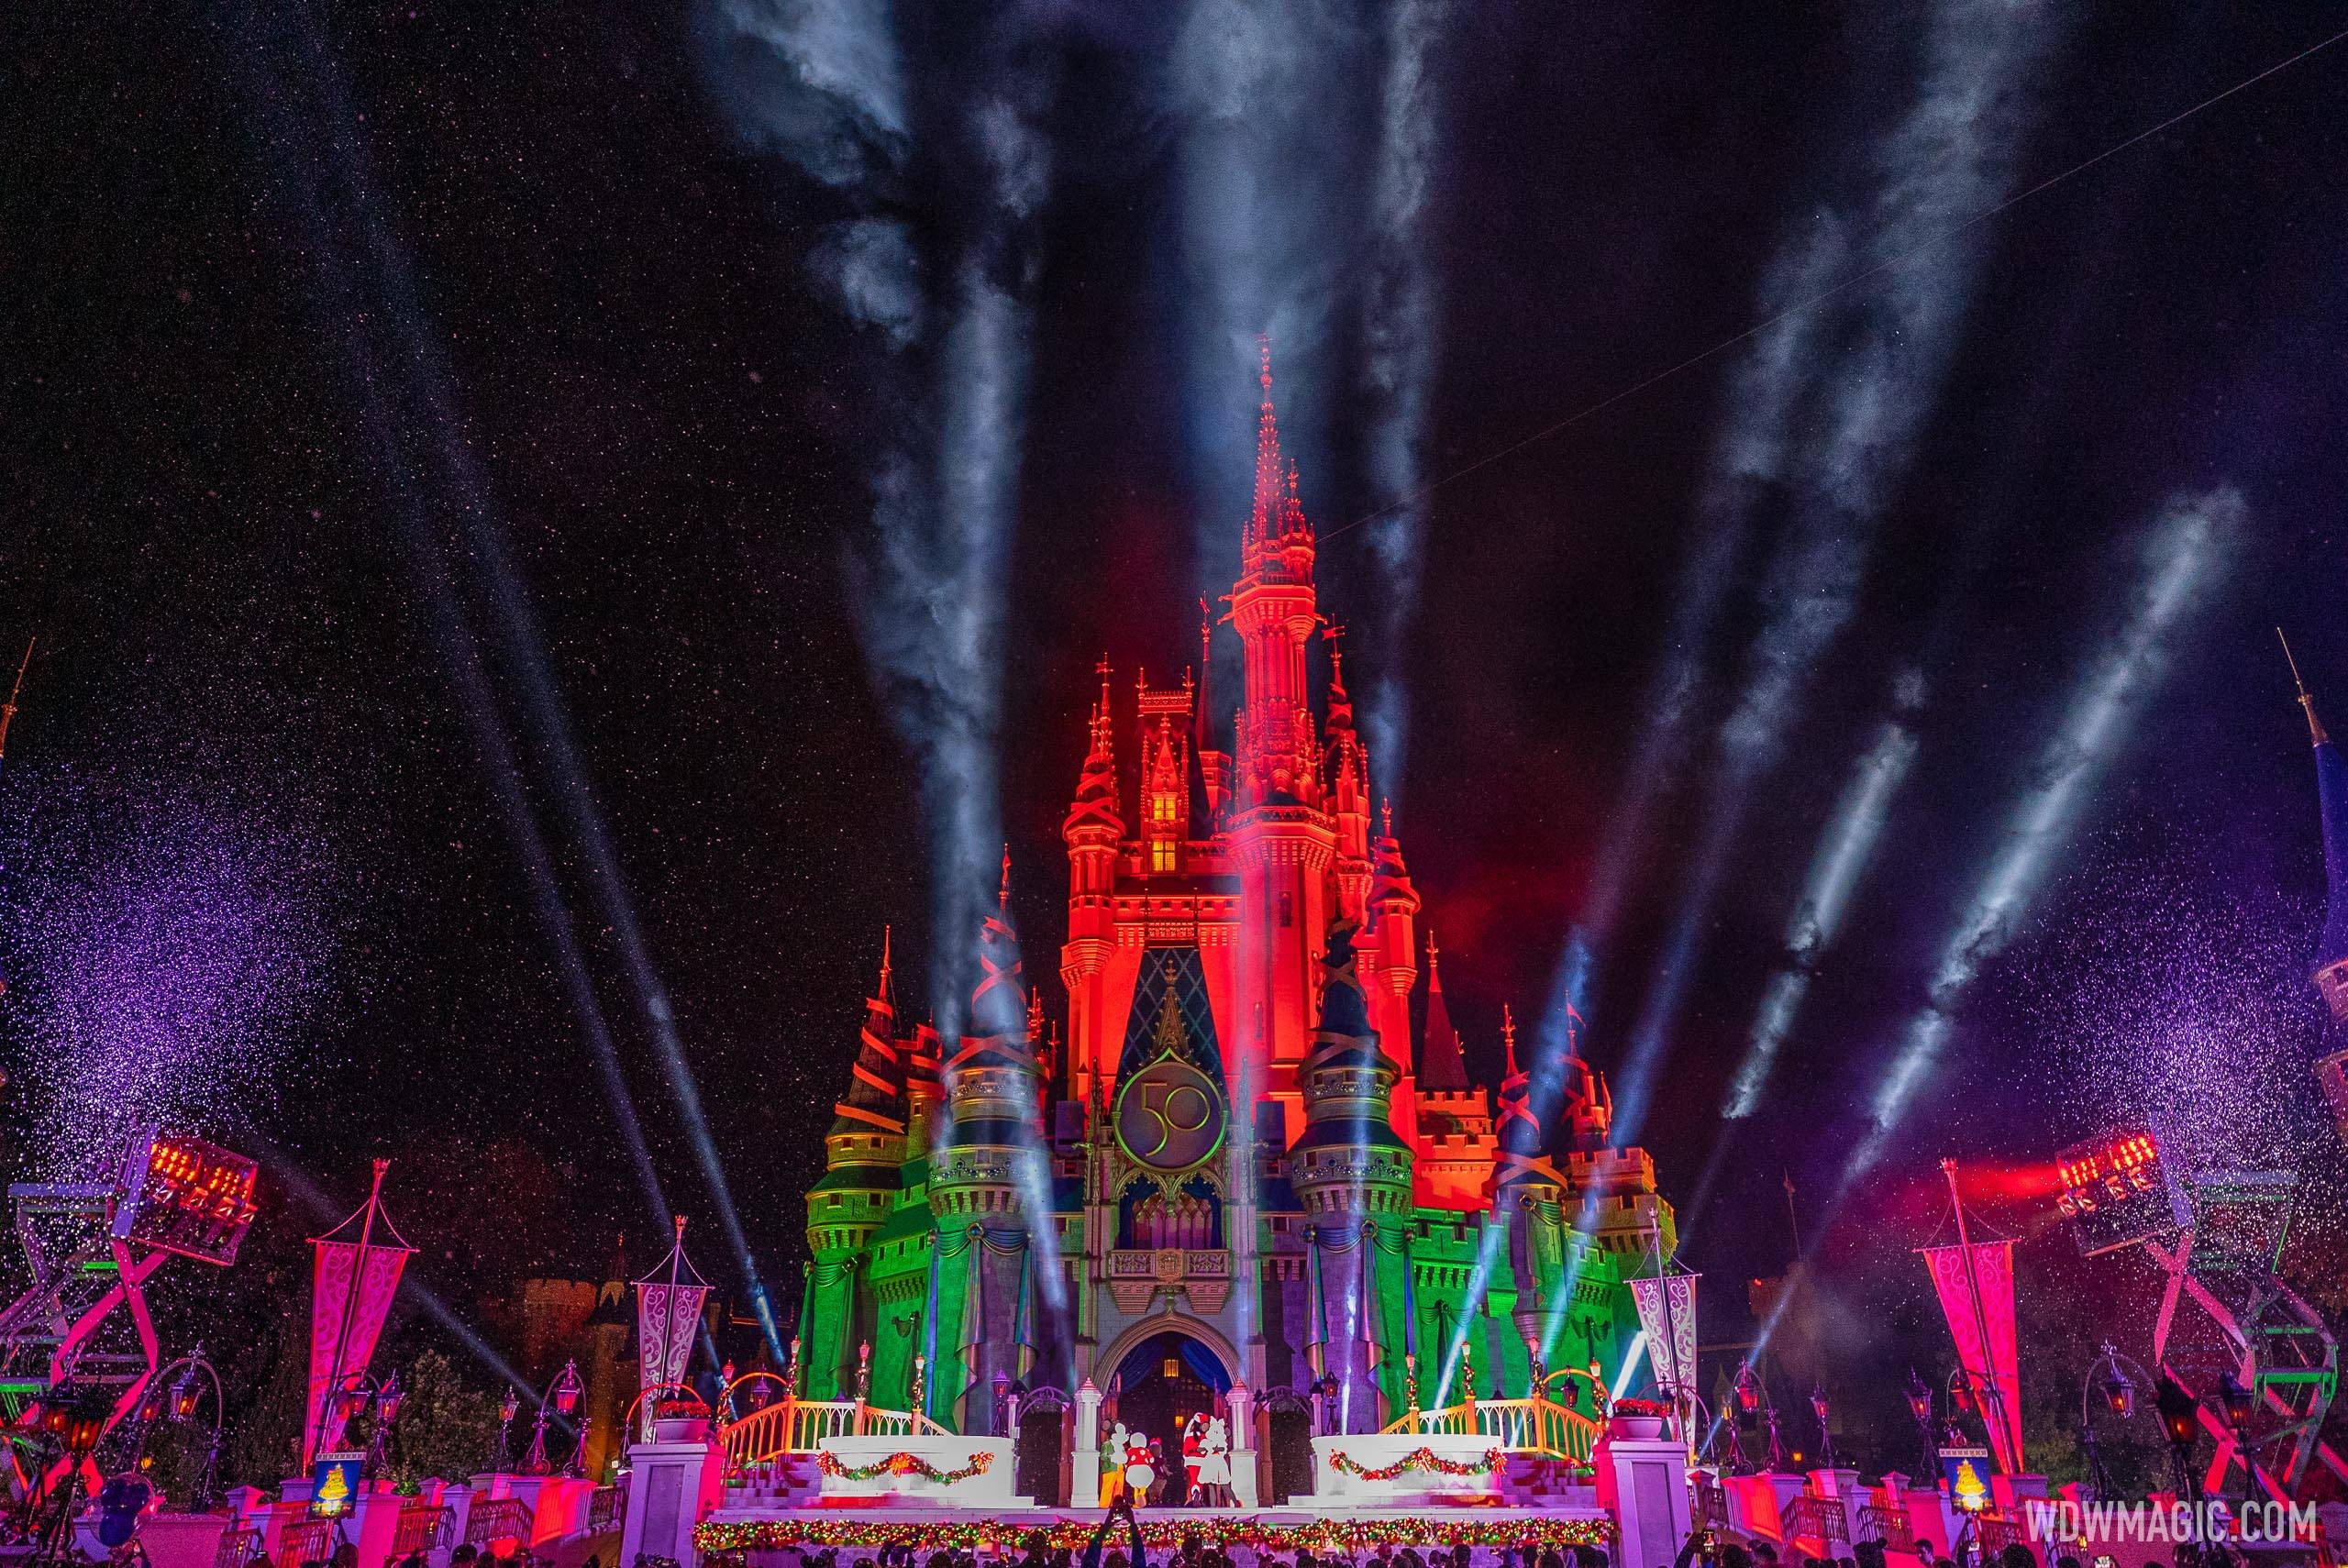 Mickey and Minnie's Very Merry Memories opening night